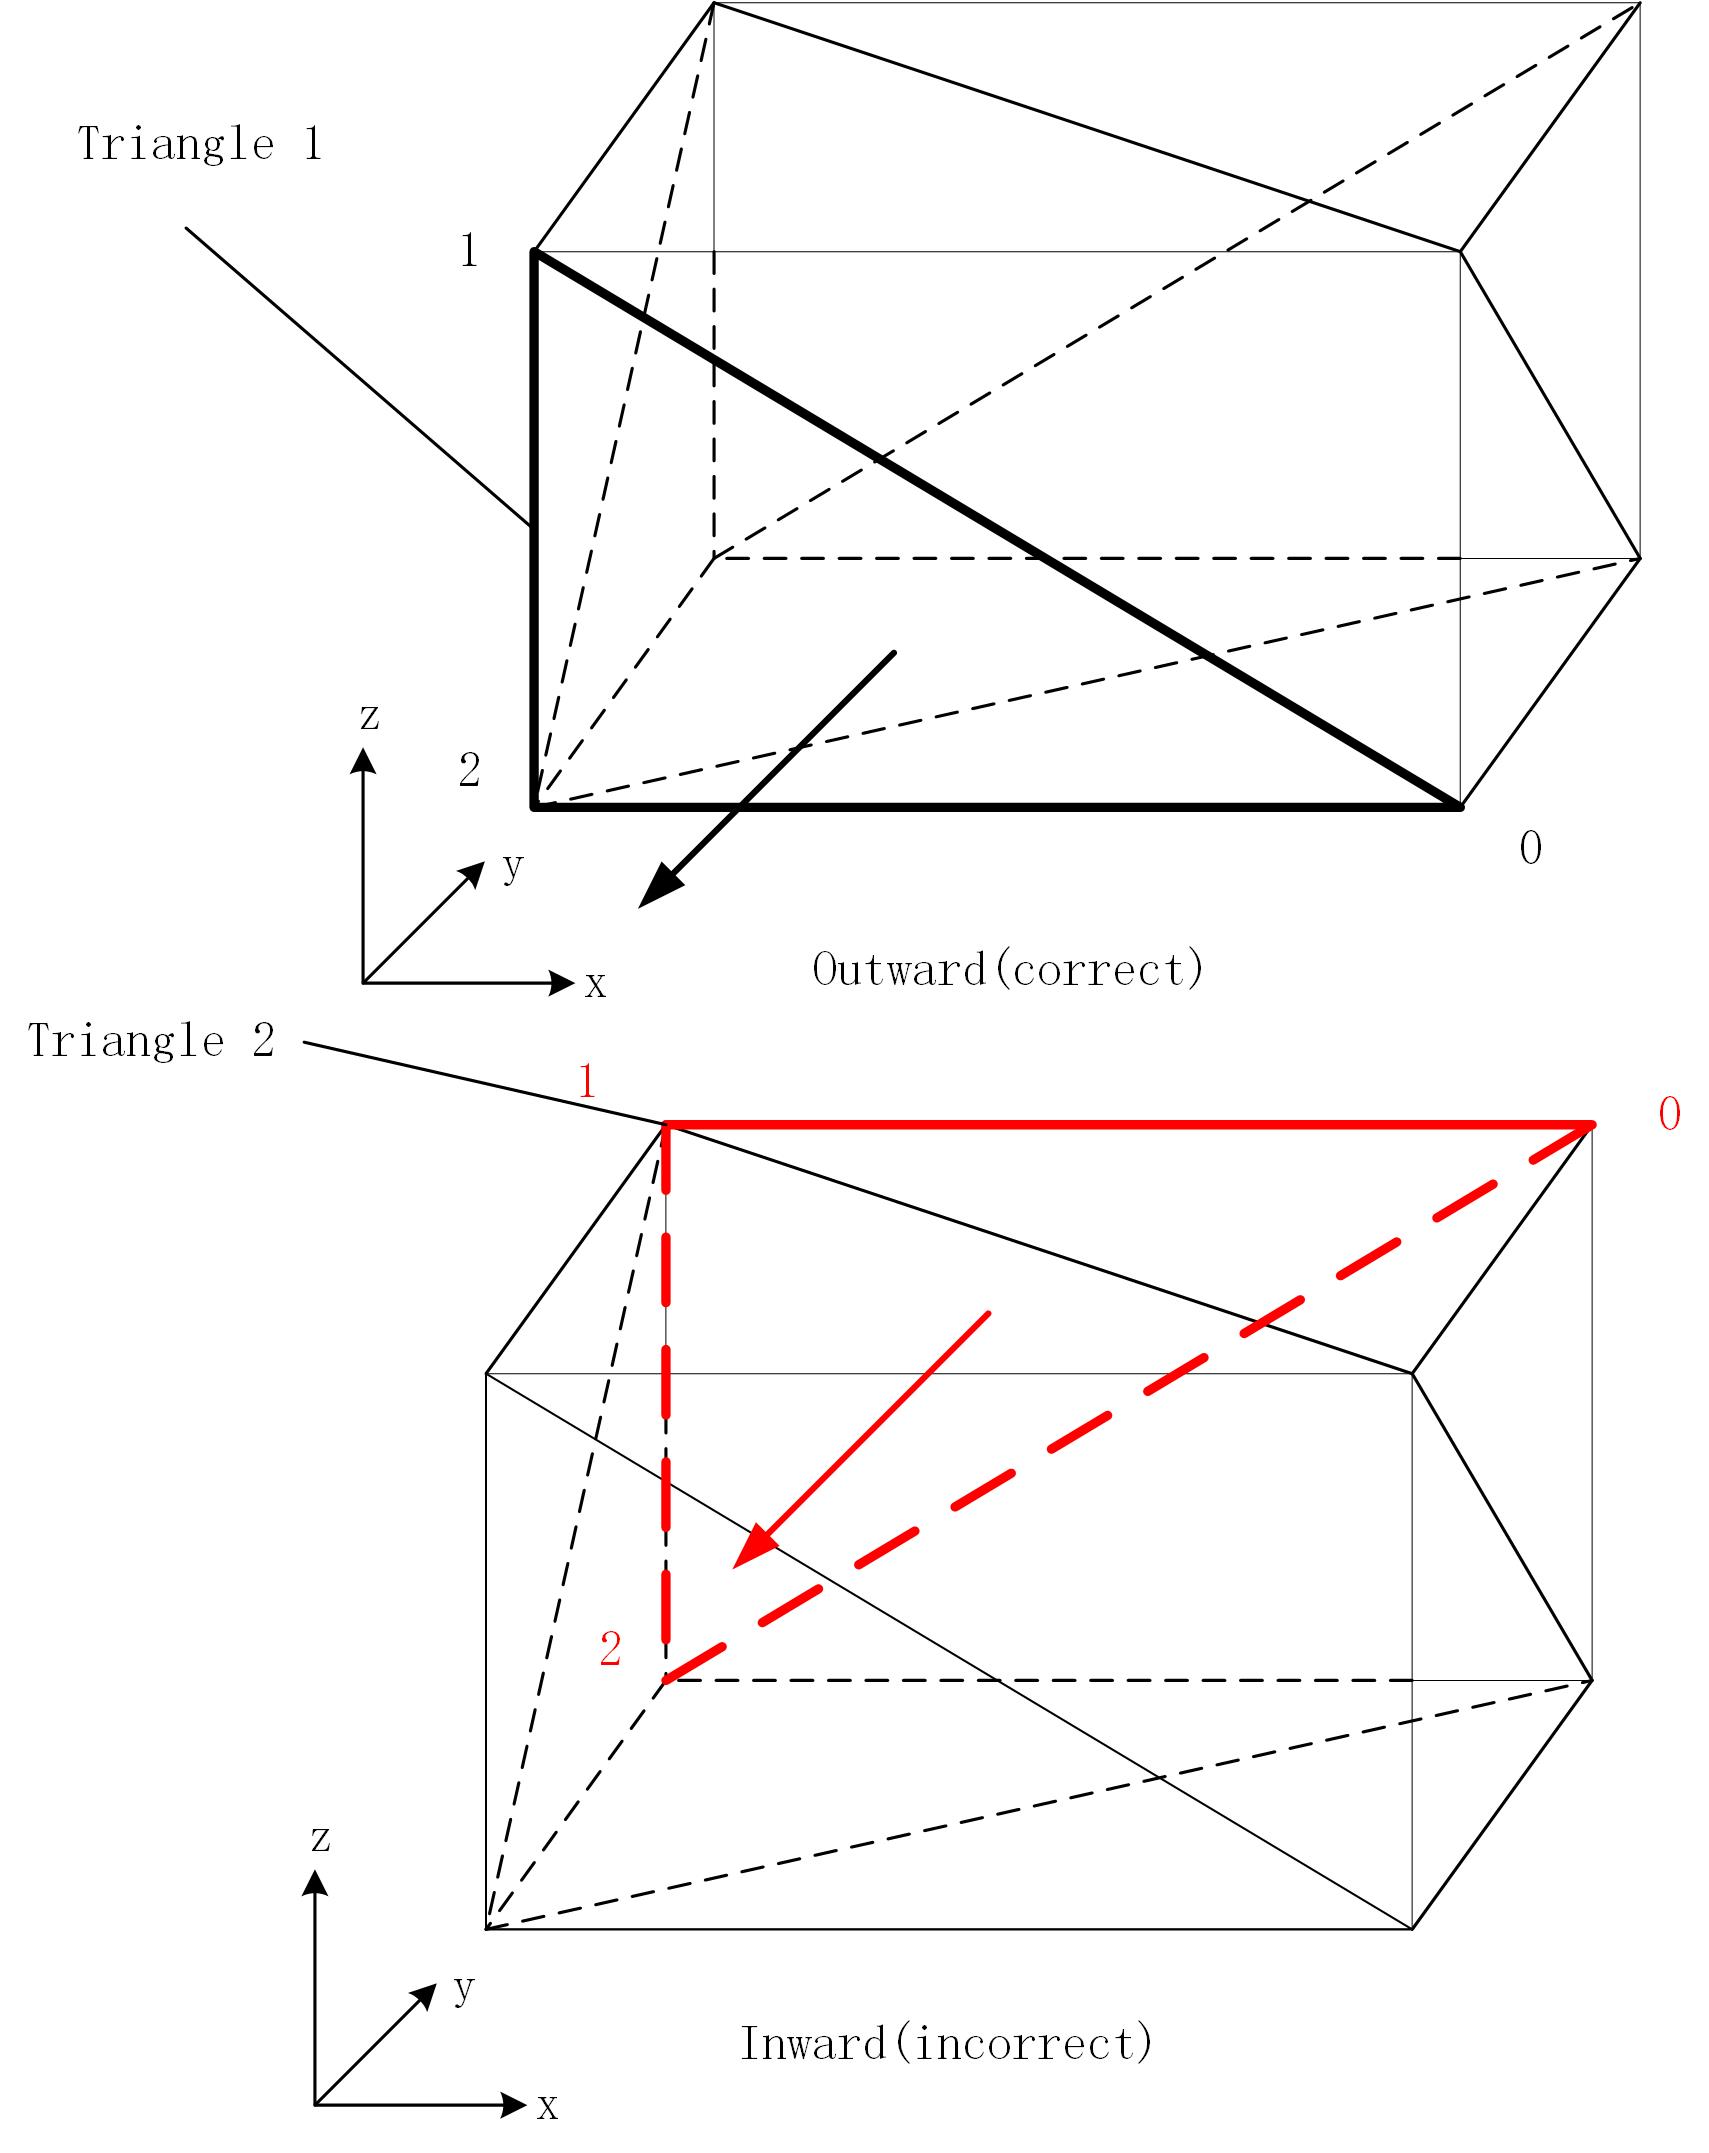 Triangle orientation